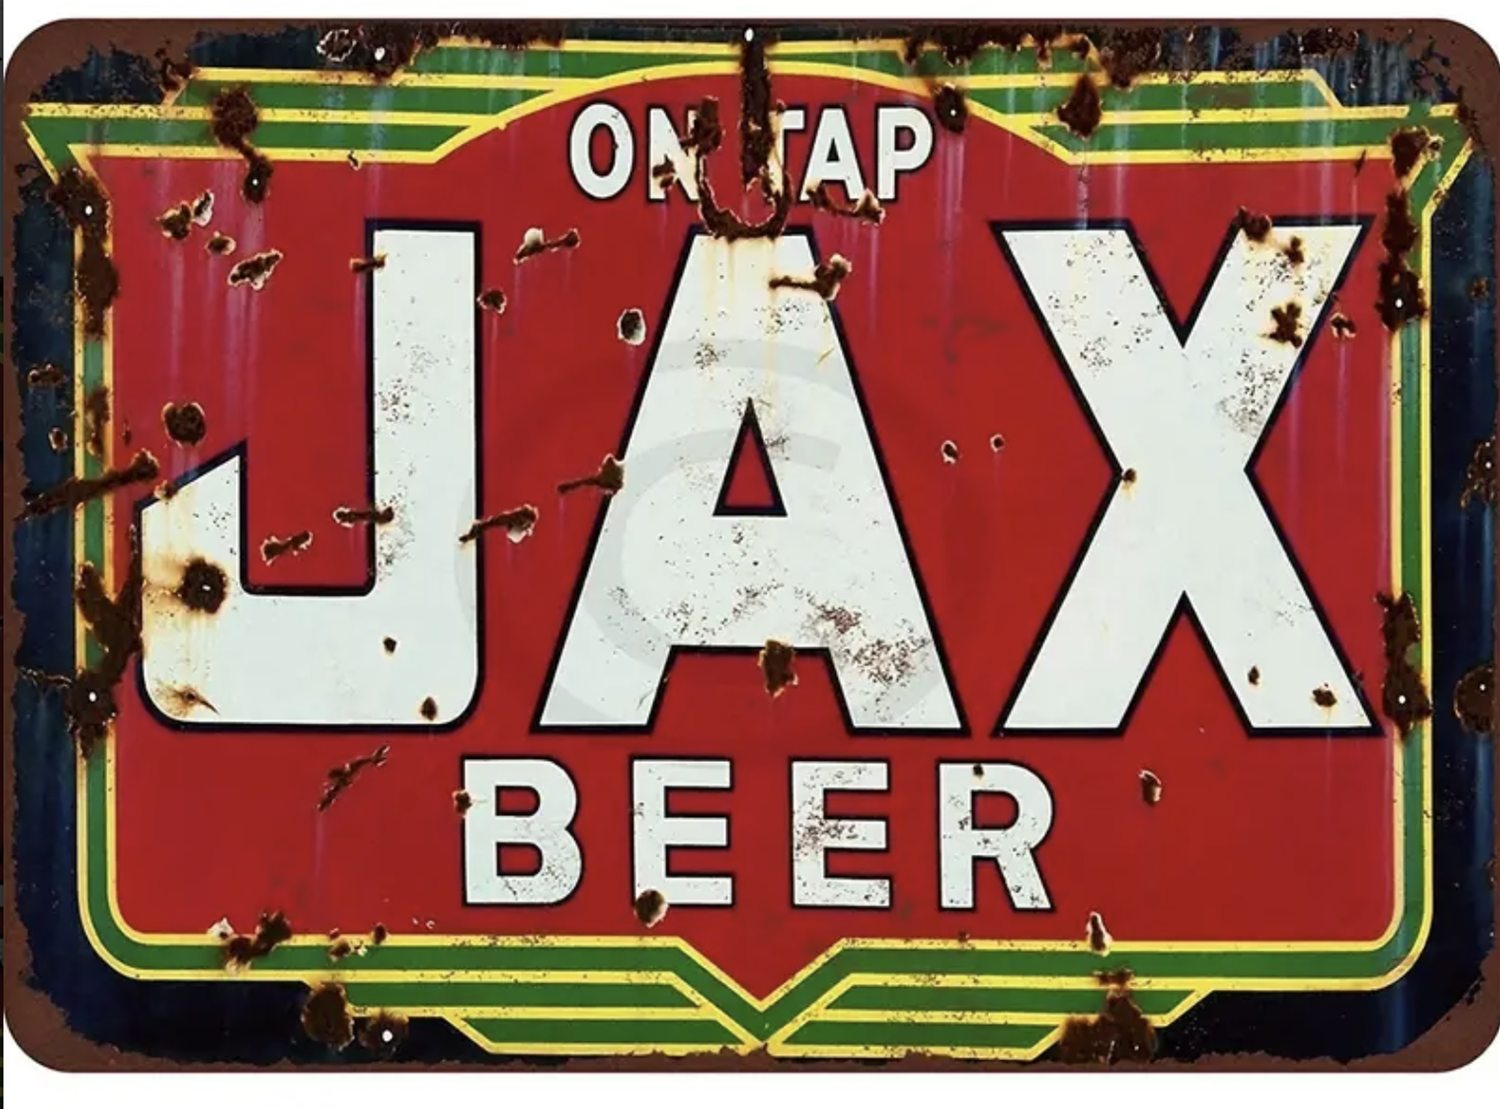 Jax Beer Metal Sign